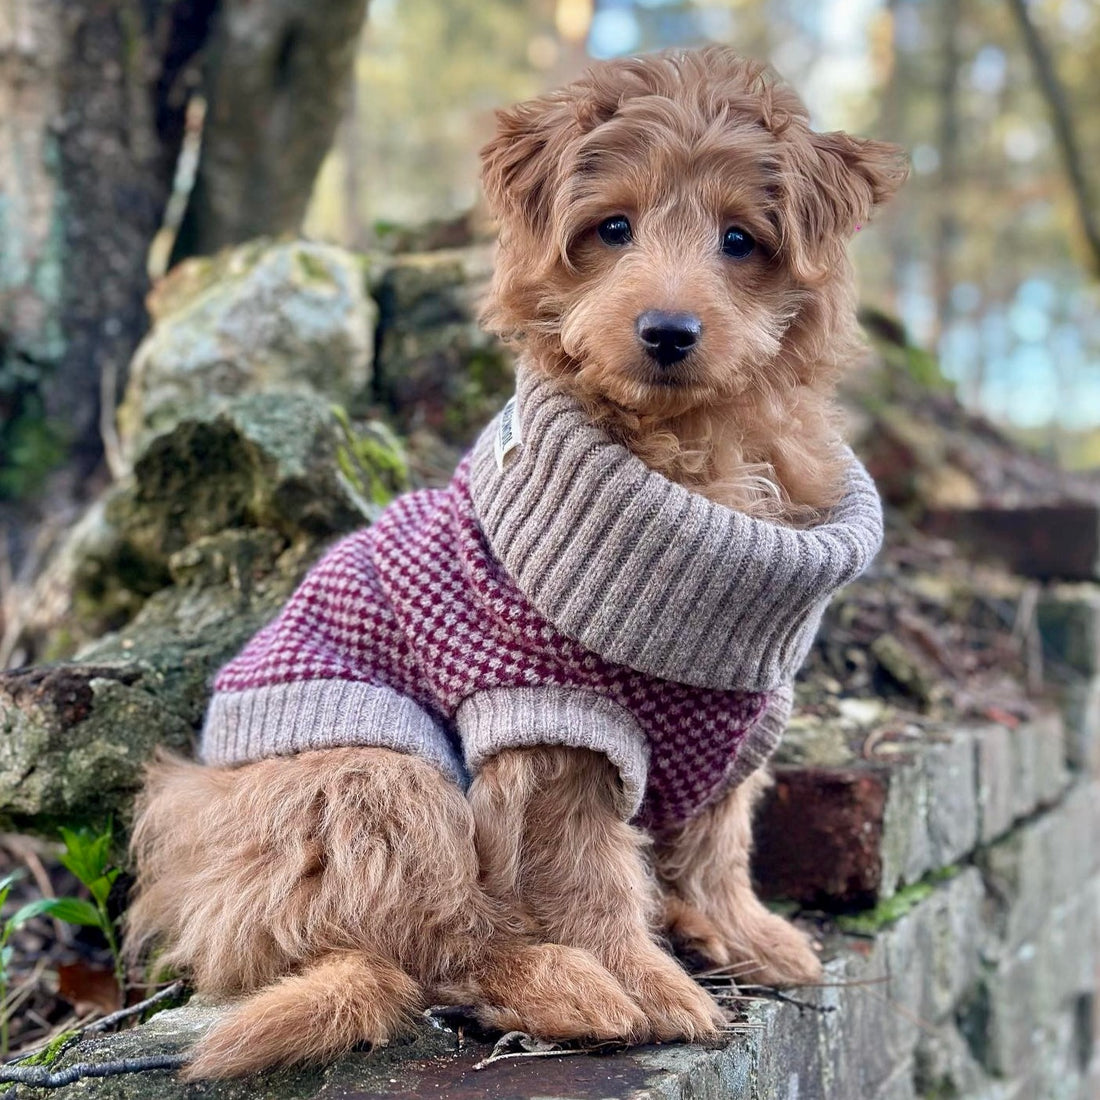 Puppy in a burgundy jumper